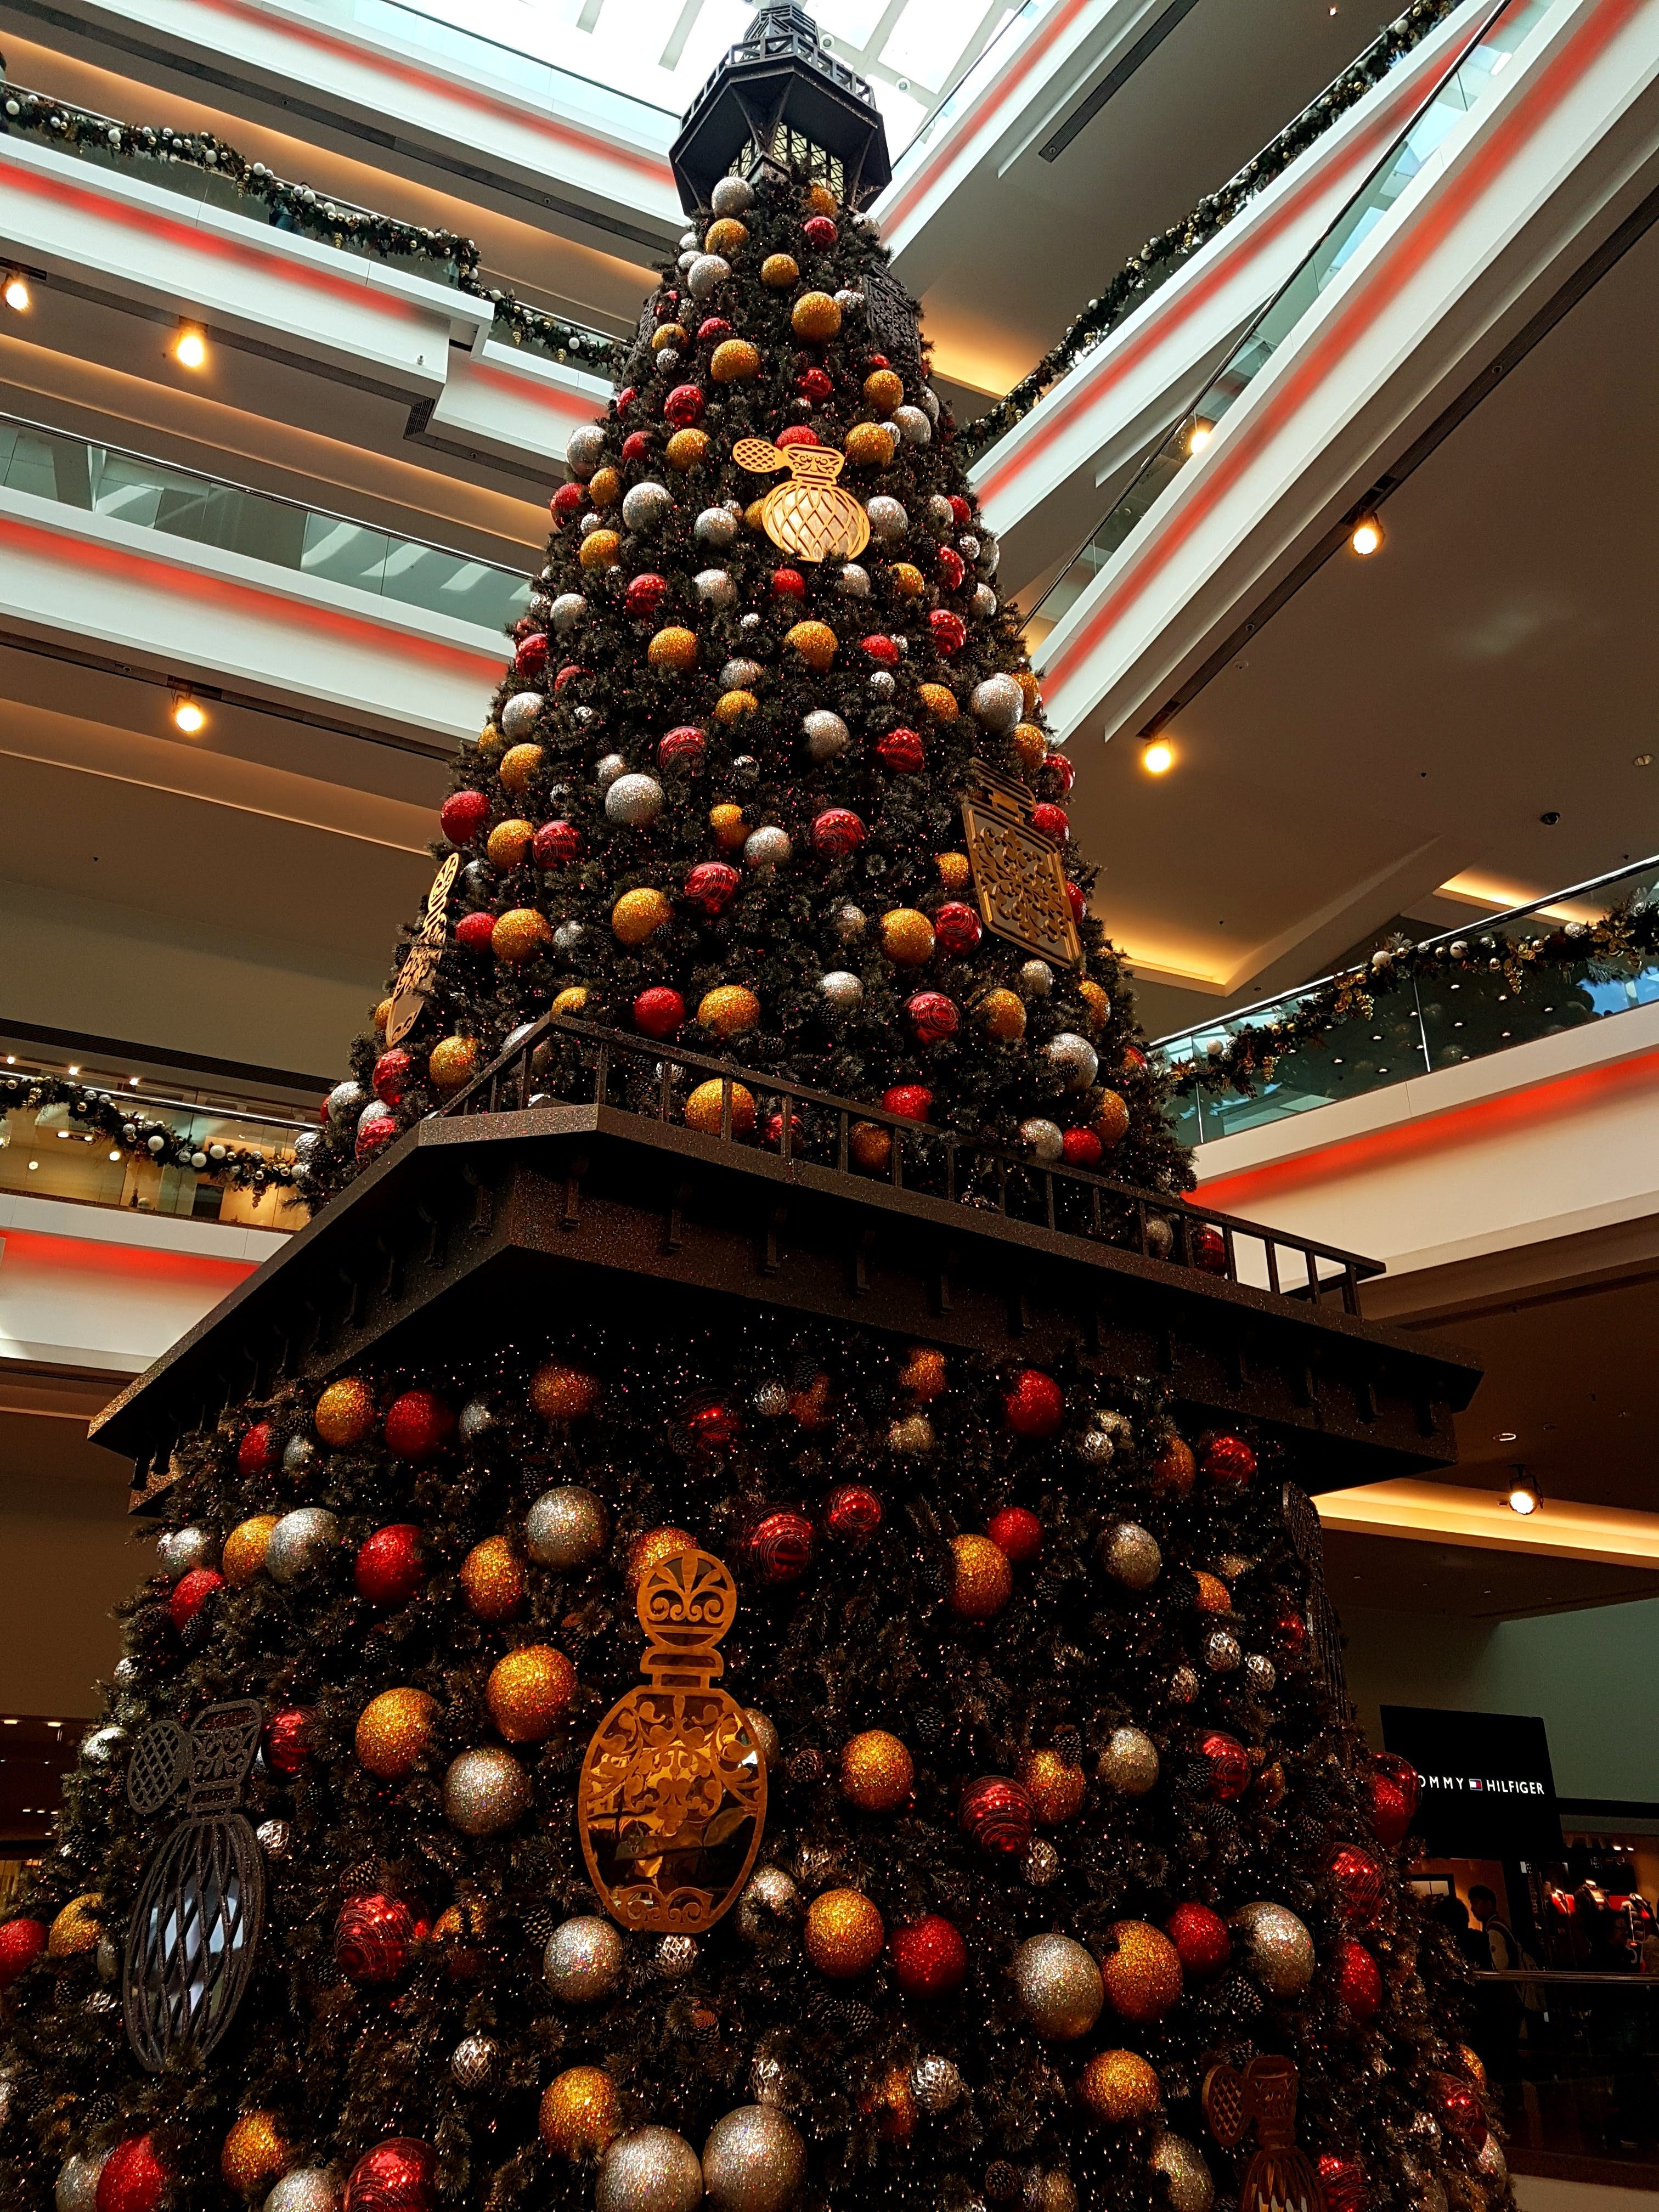 Festive Walk Mall's decorated Christmas Tree - Kowloon Tong